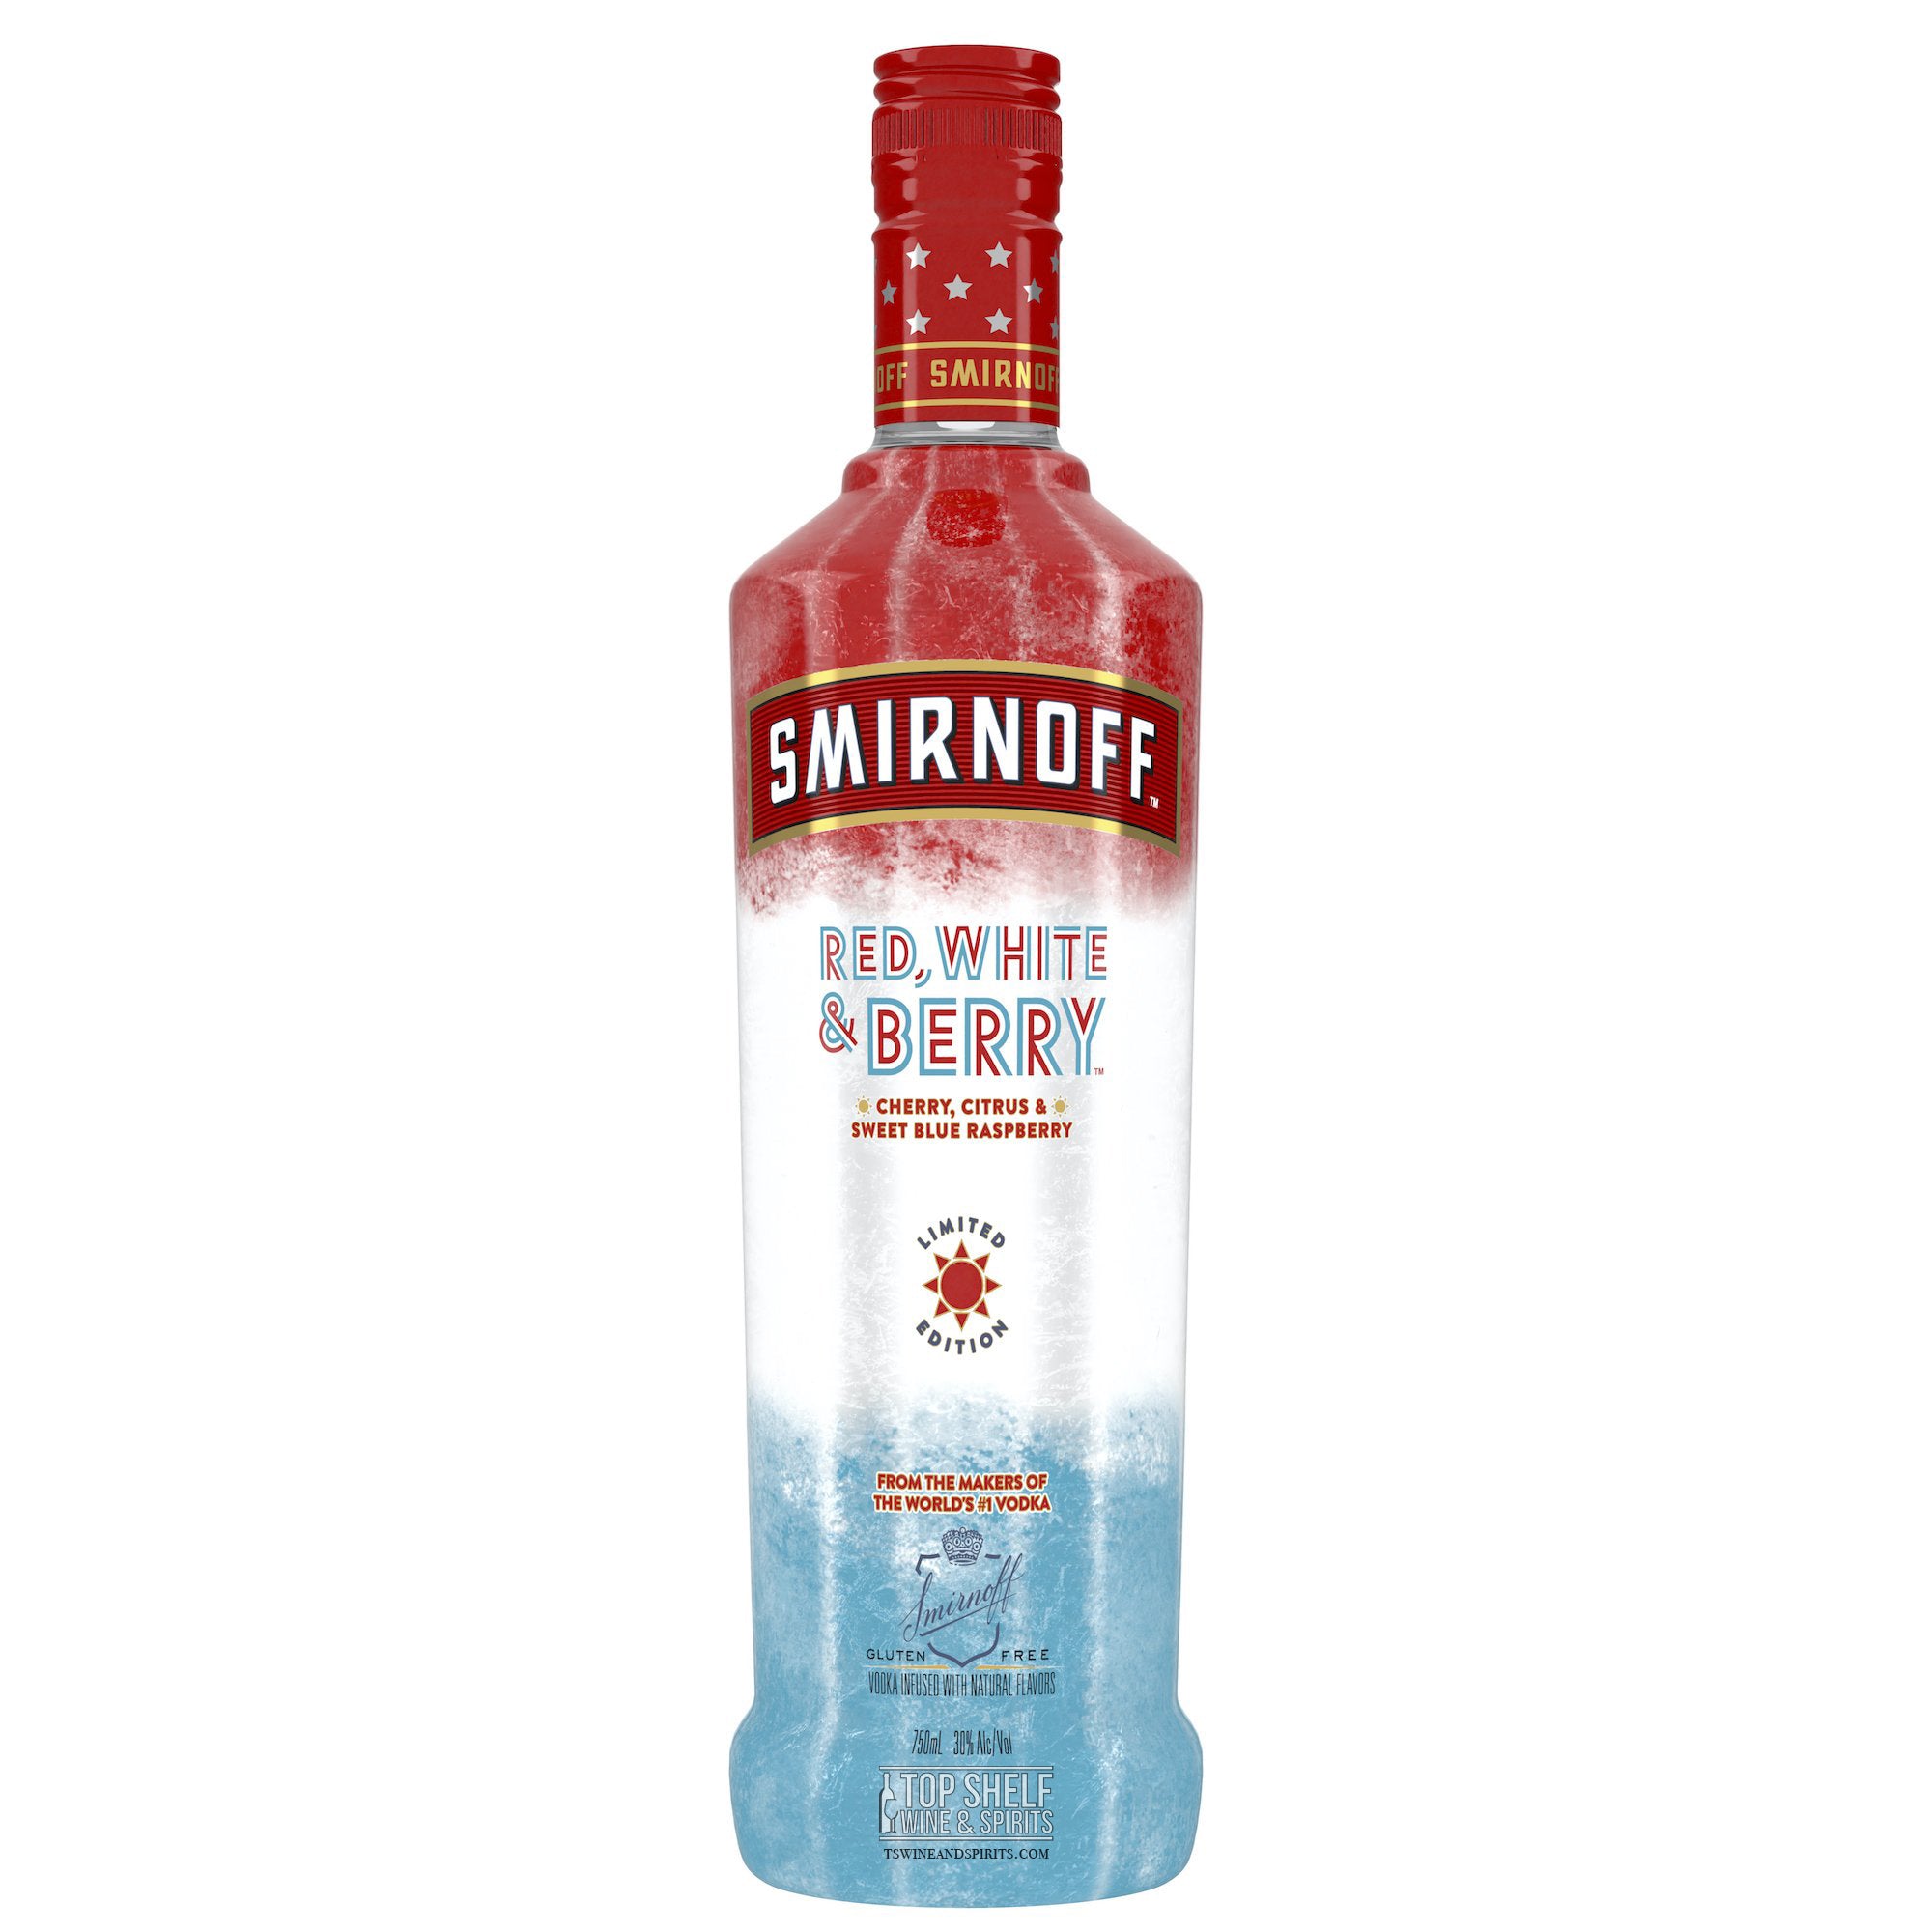 Smirnoff Red, White, and Berry Vodka